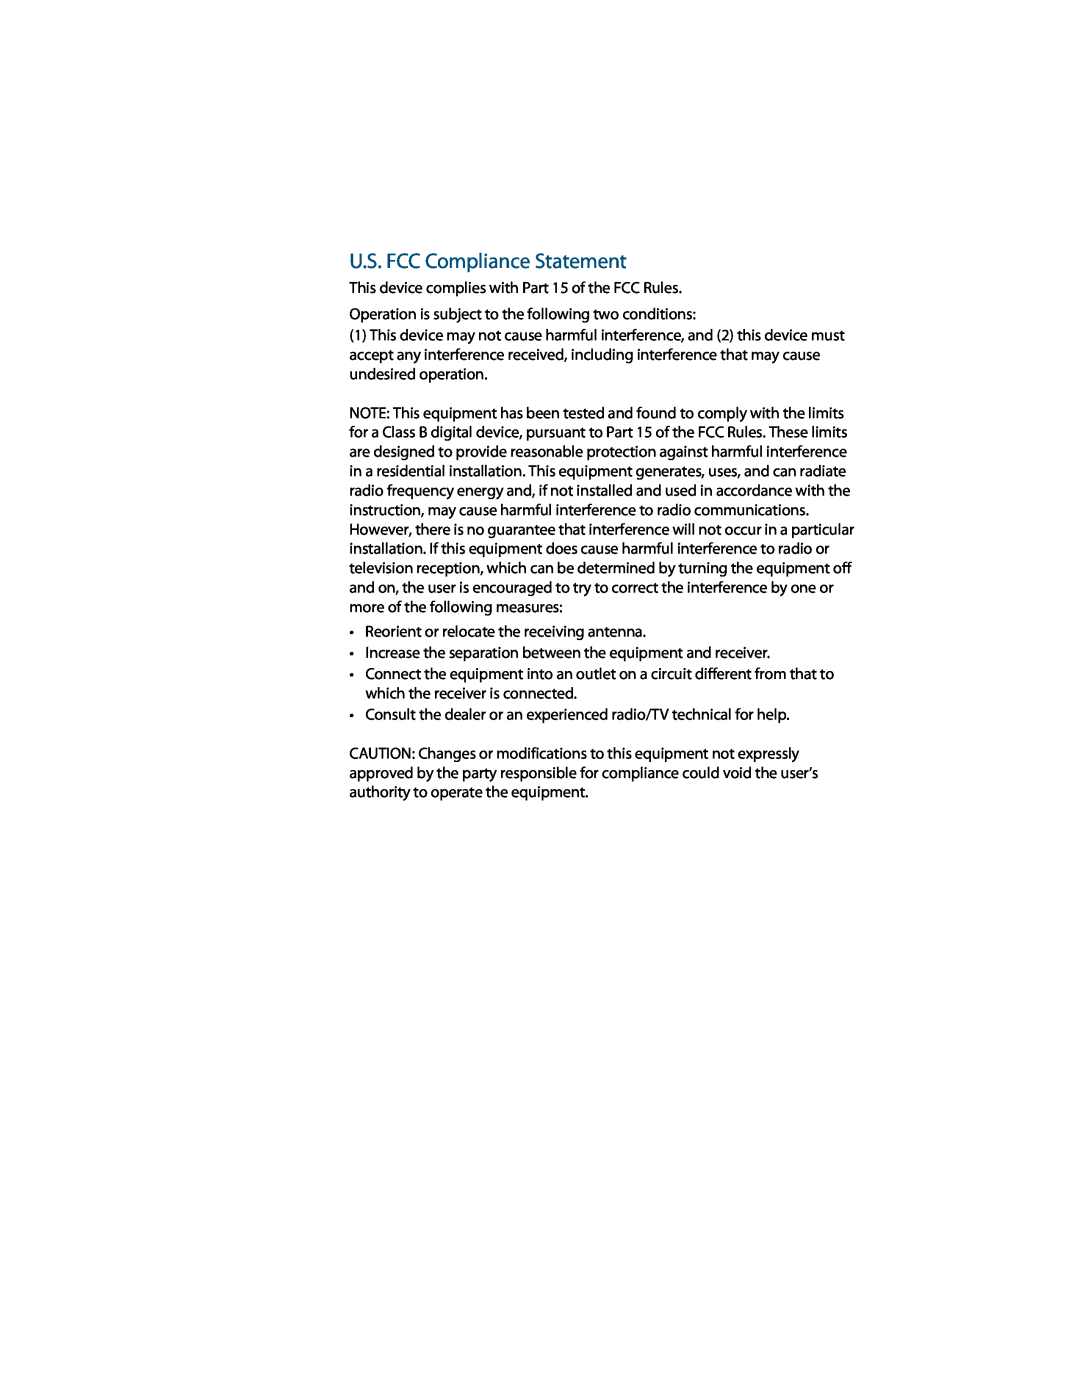 Planar E2c Display manual U.S. FCC Compliance Statement 